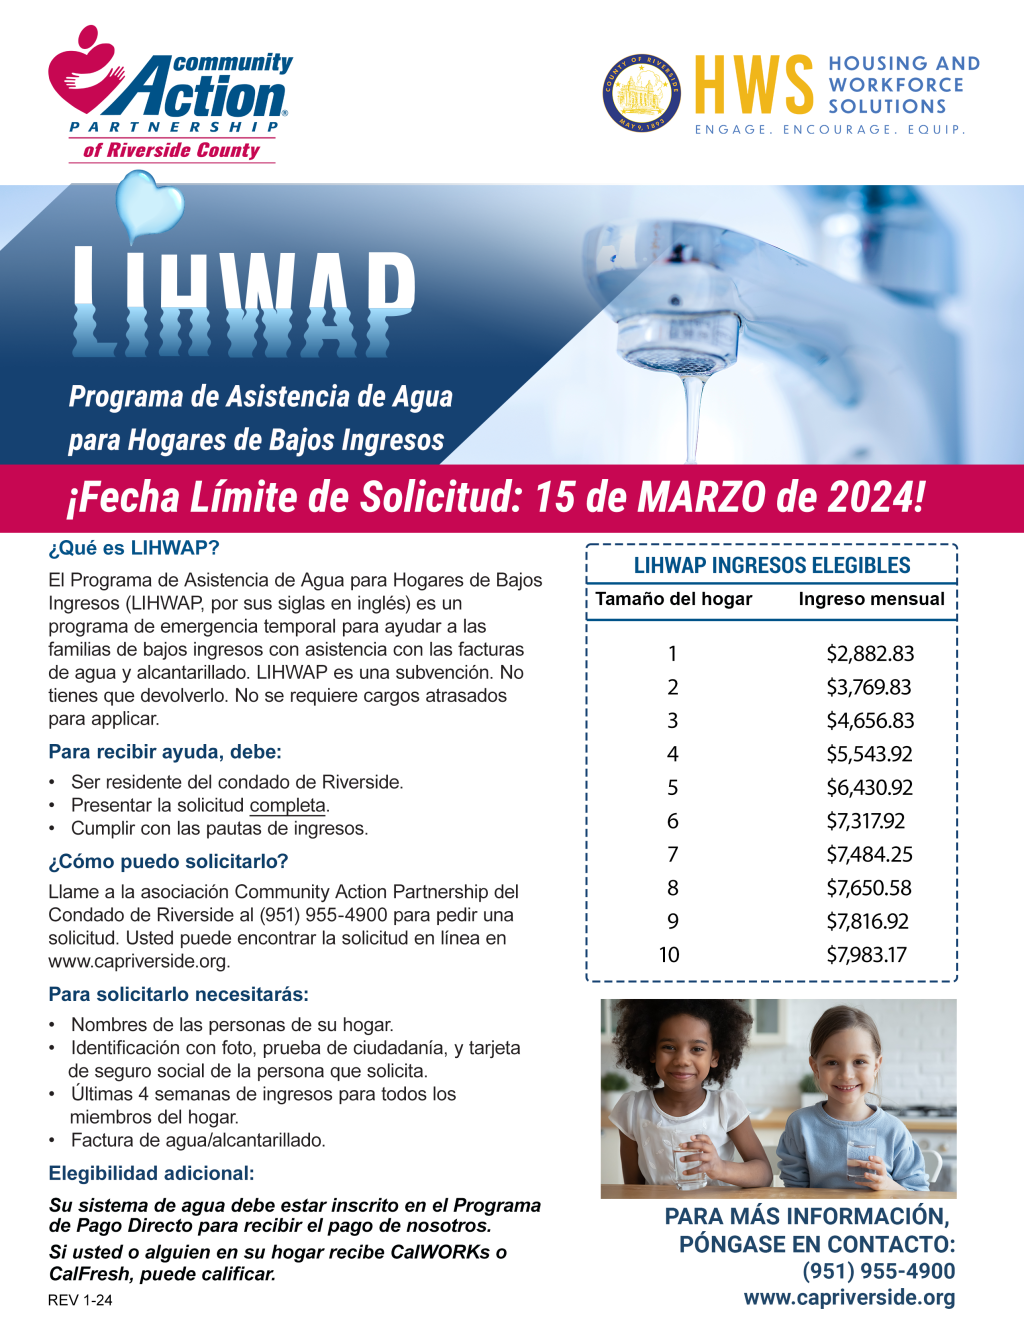 LIHWAP March 15, 2024 Deadline to Apply